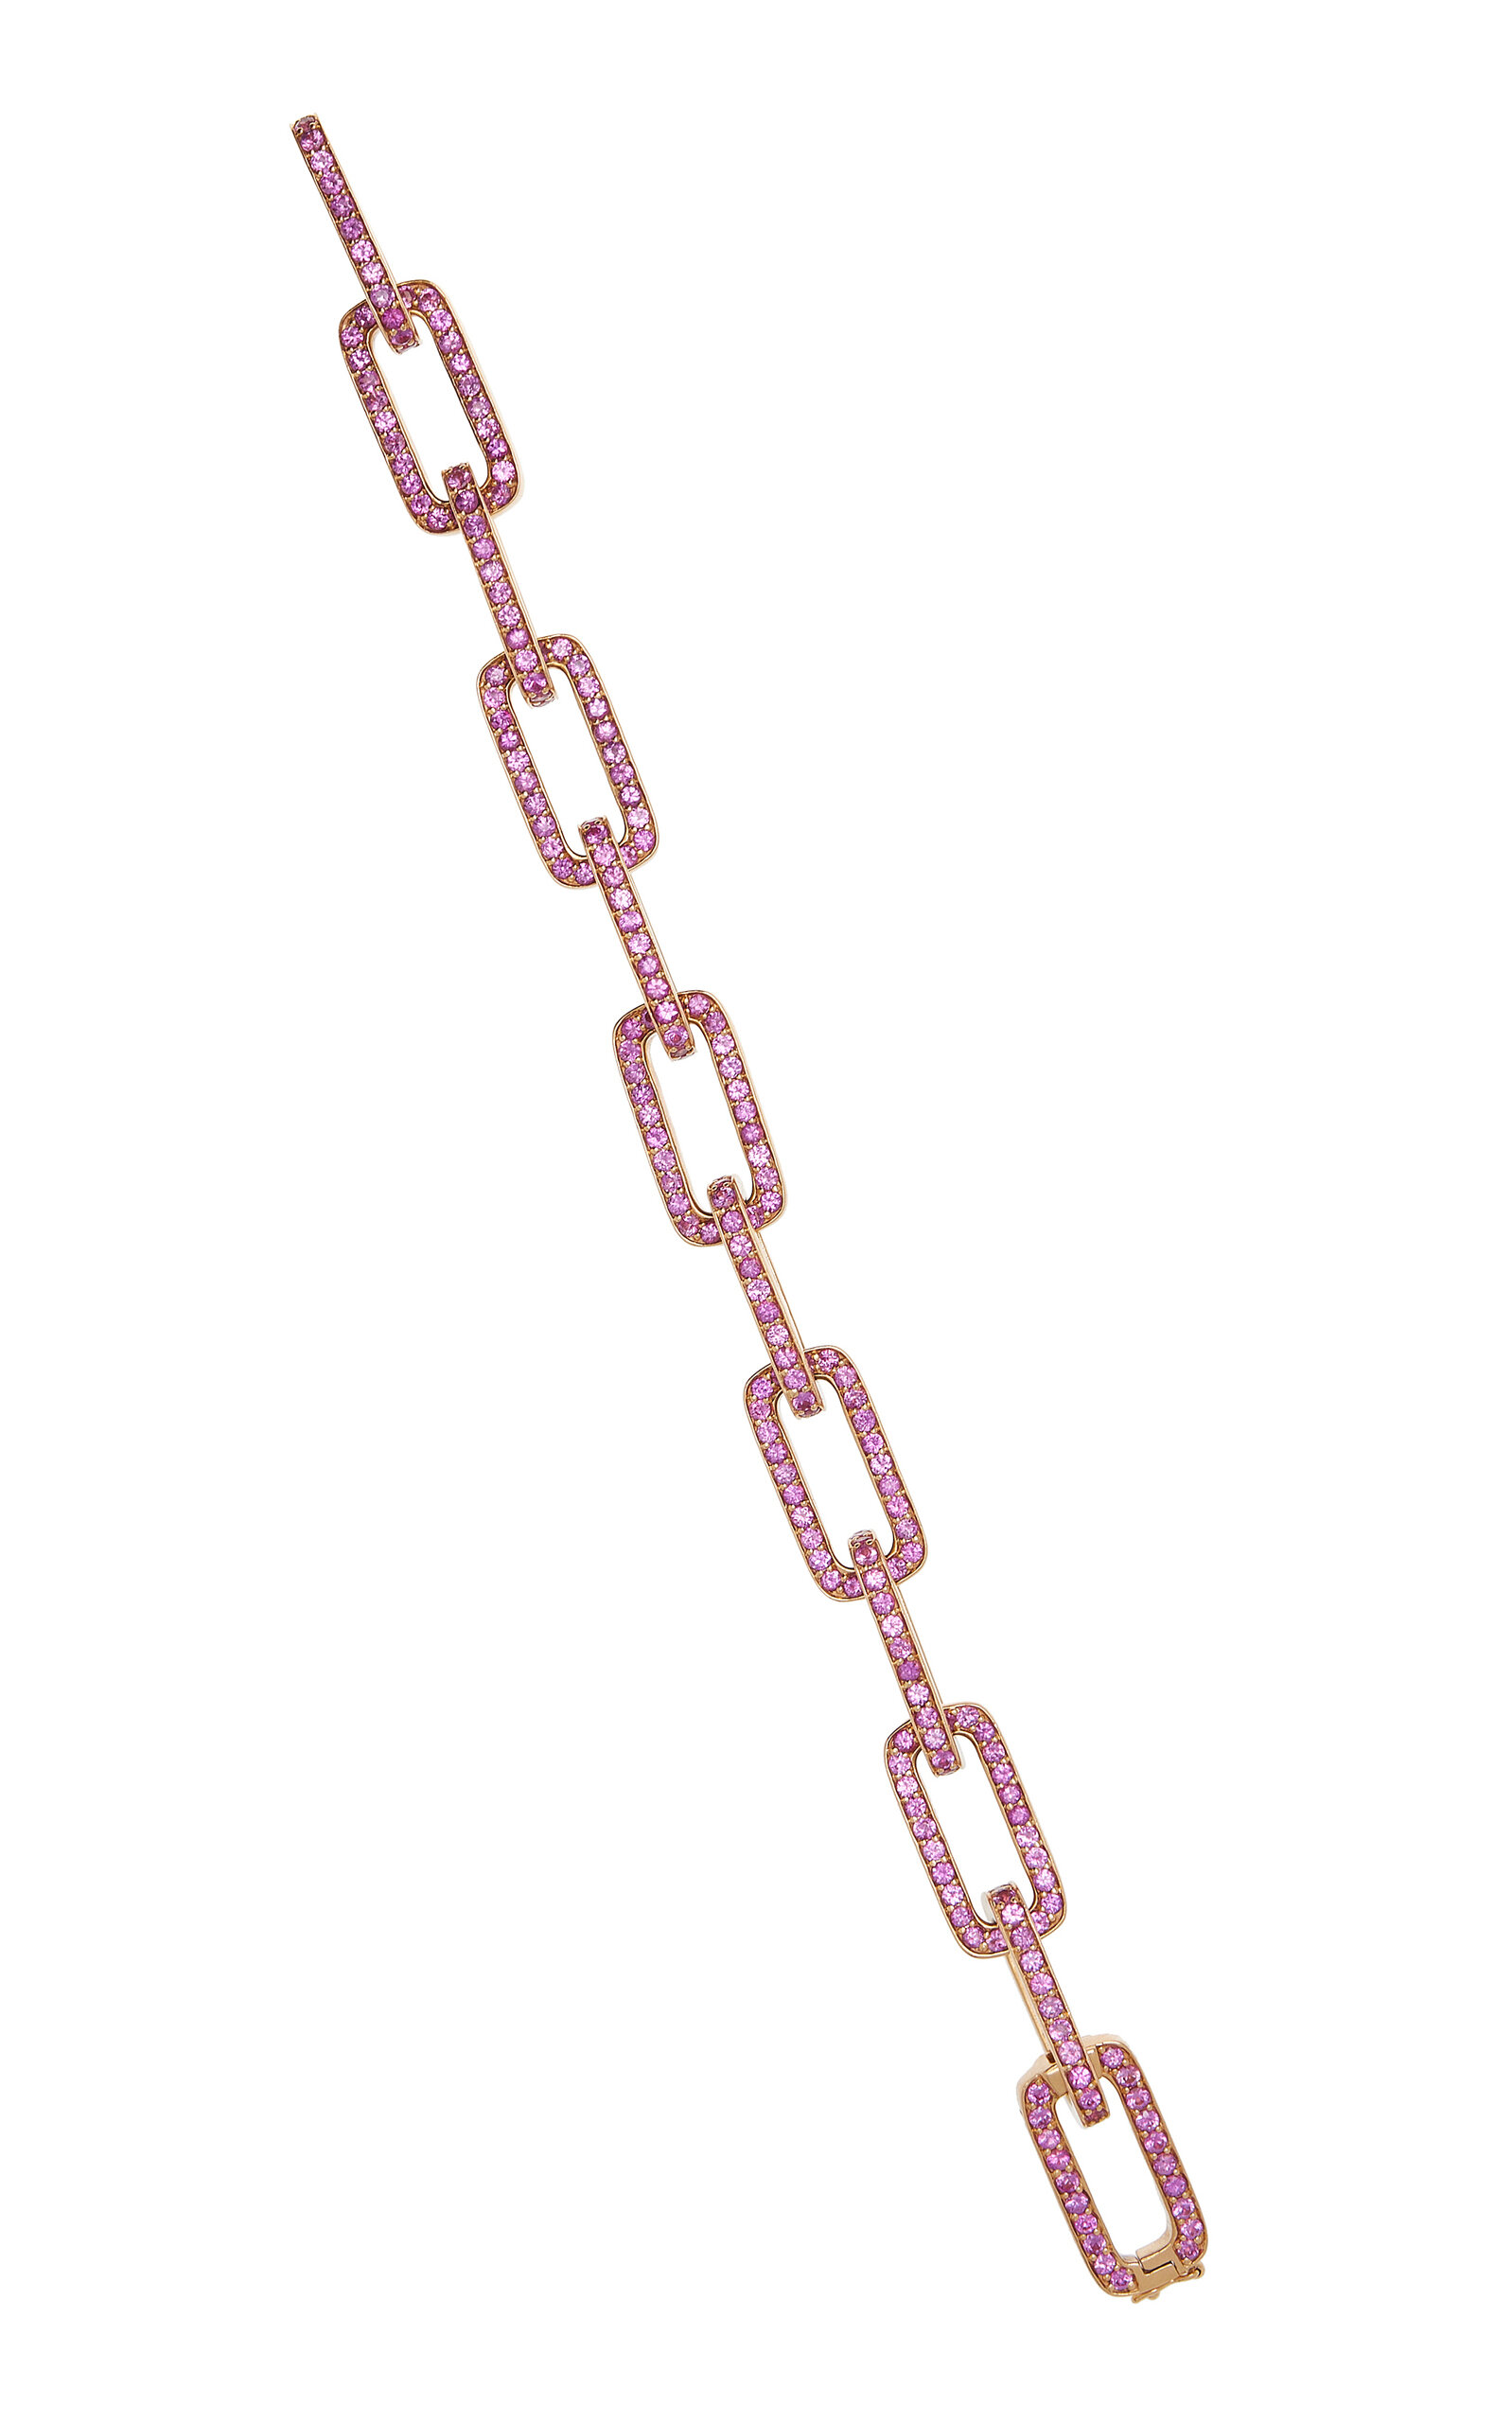 Piranesi Women's 18K Gold Mosaique Link Bracelet in Pink Sapphire